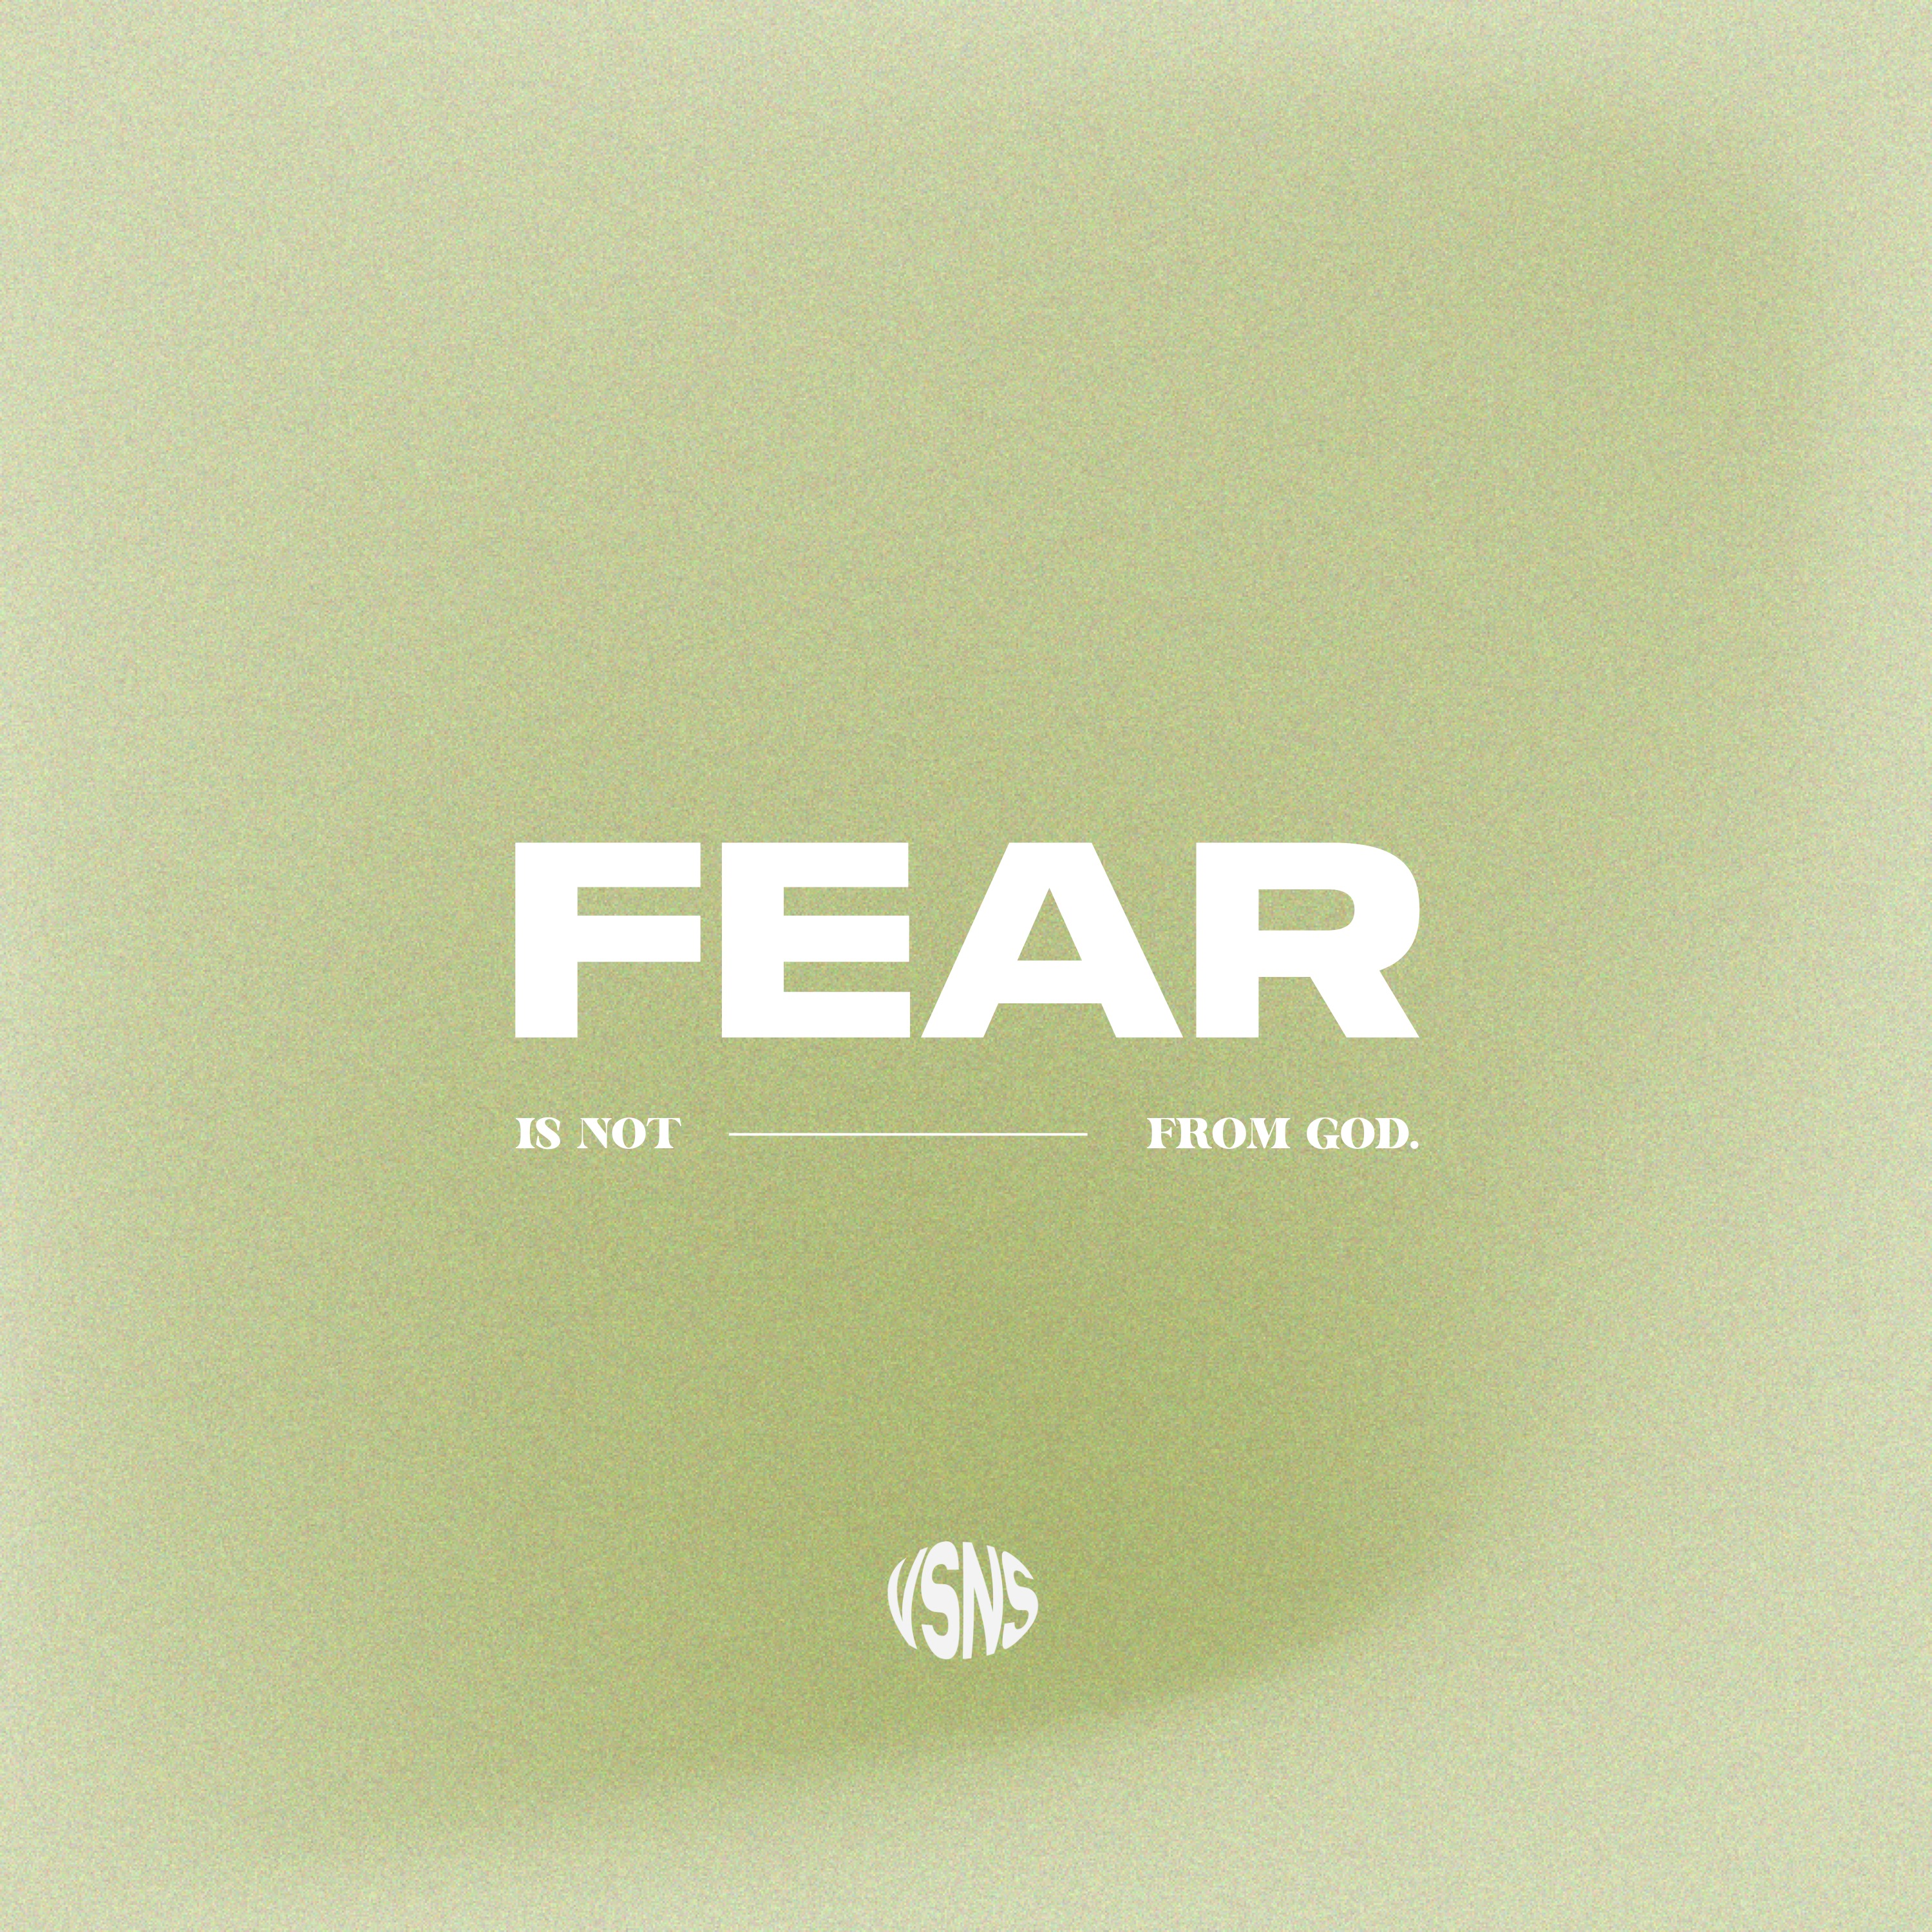 Fear isn’t from God